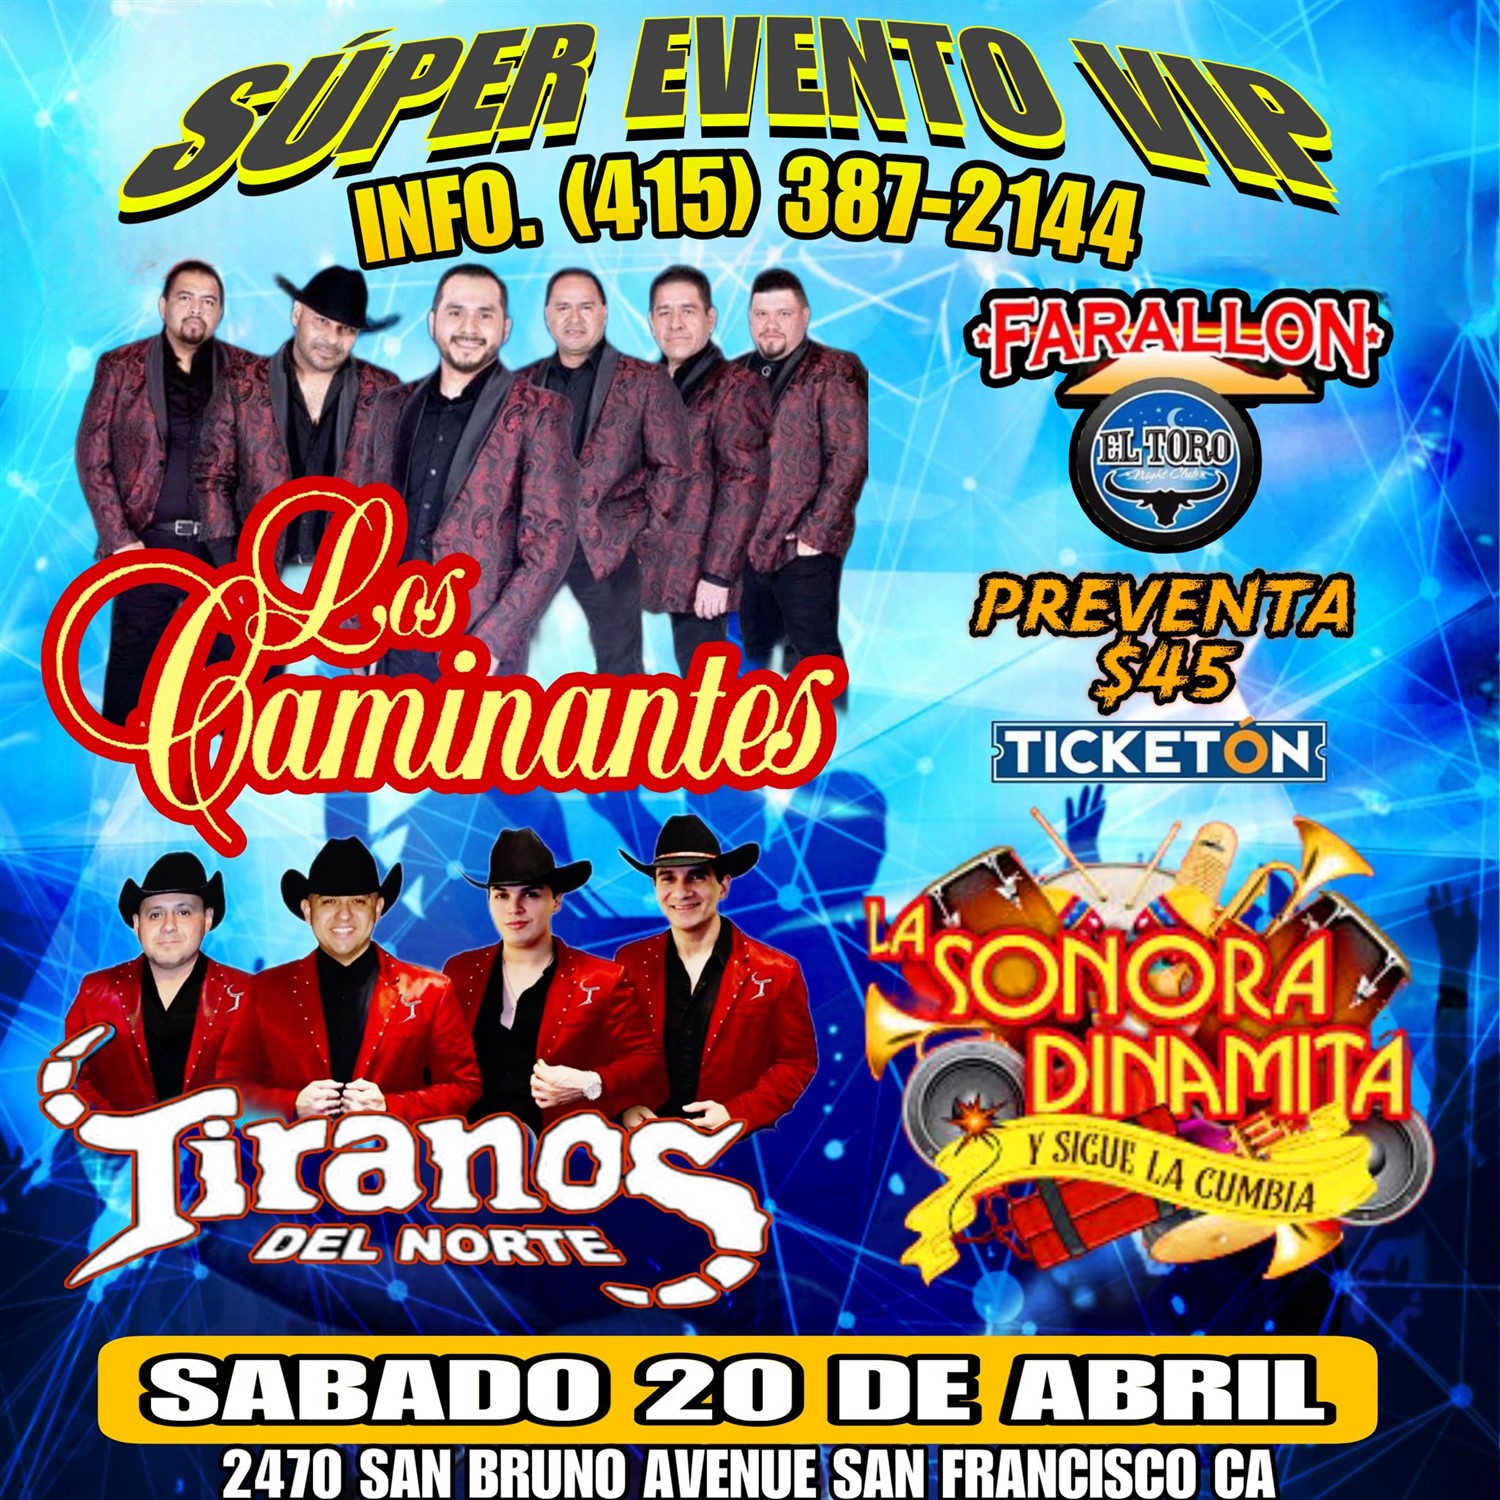 TIRANOS Y CAMINANTES  on Apr 20, 21:00@TORO SAN FRANCISCO - Buy tickets and Get information on farallonpresenta farallonpresenta